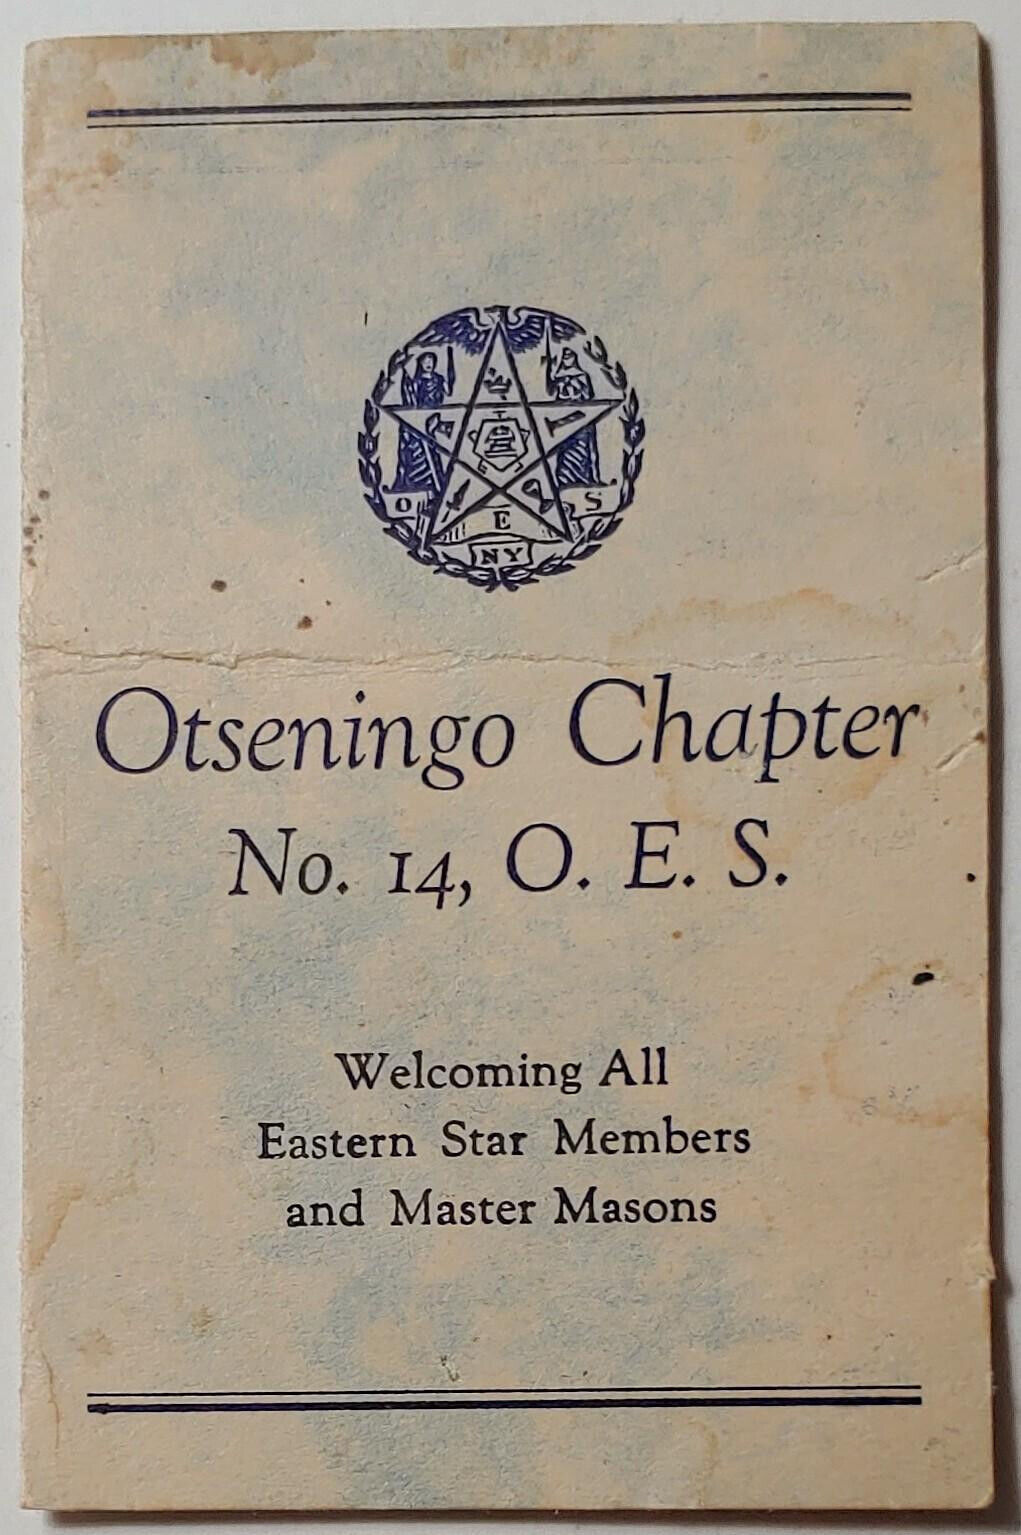 Otseningo Chapter No. 14, O.E.S., 1939 Mason\'s Masonic Meeting Program